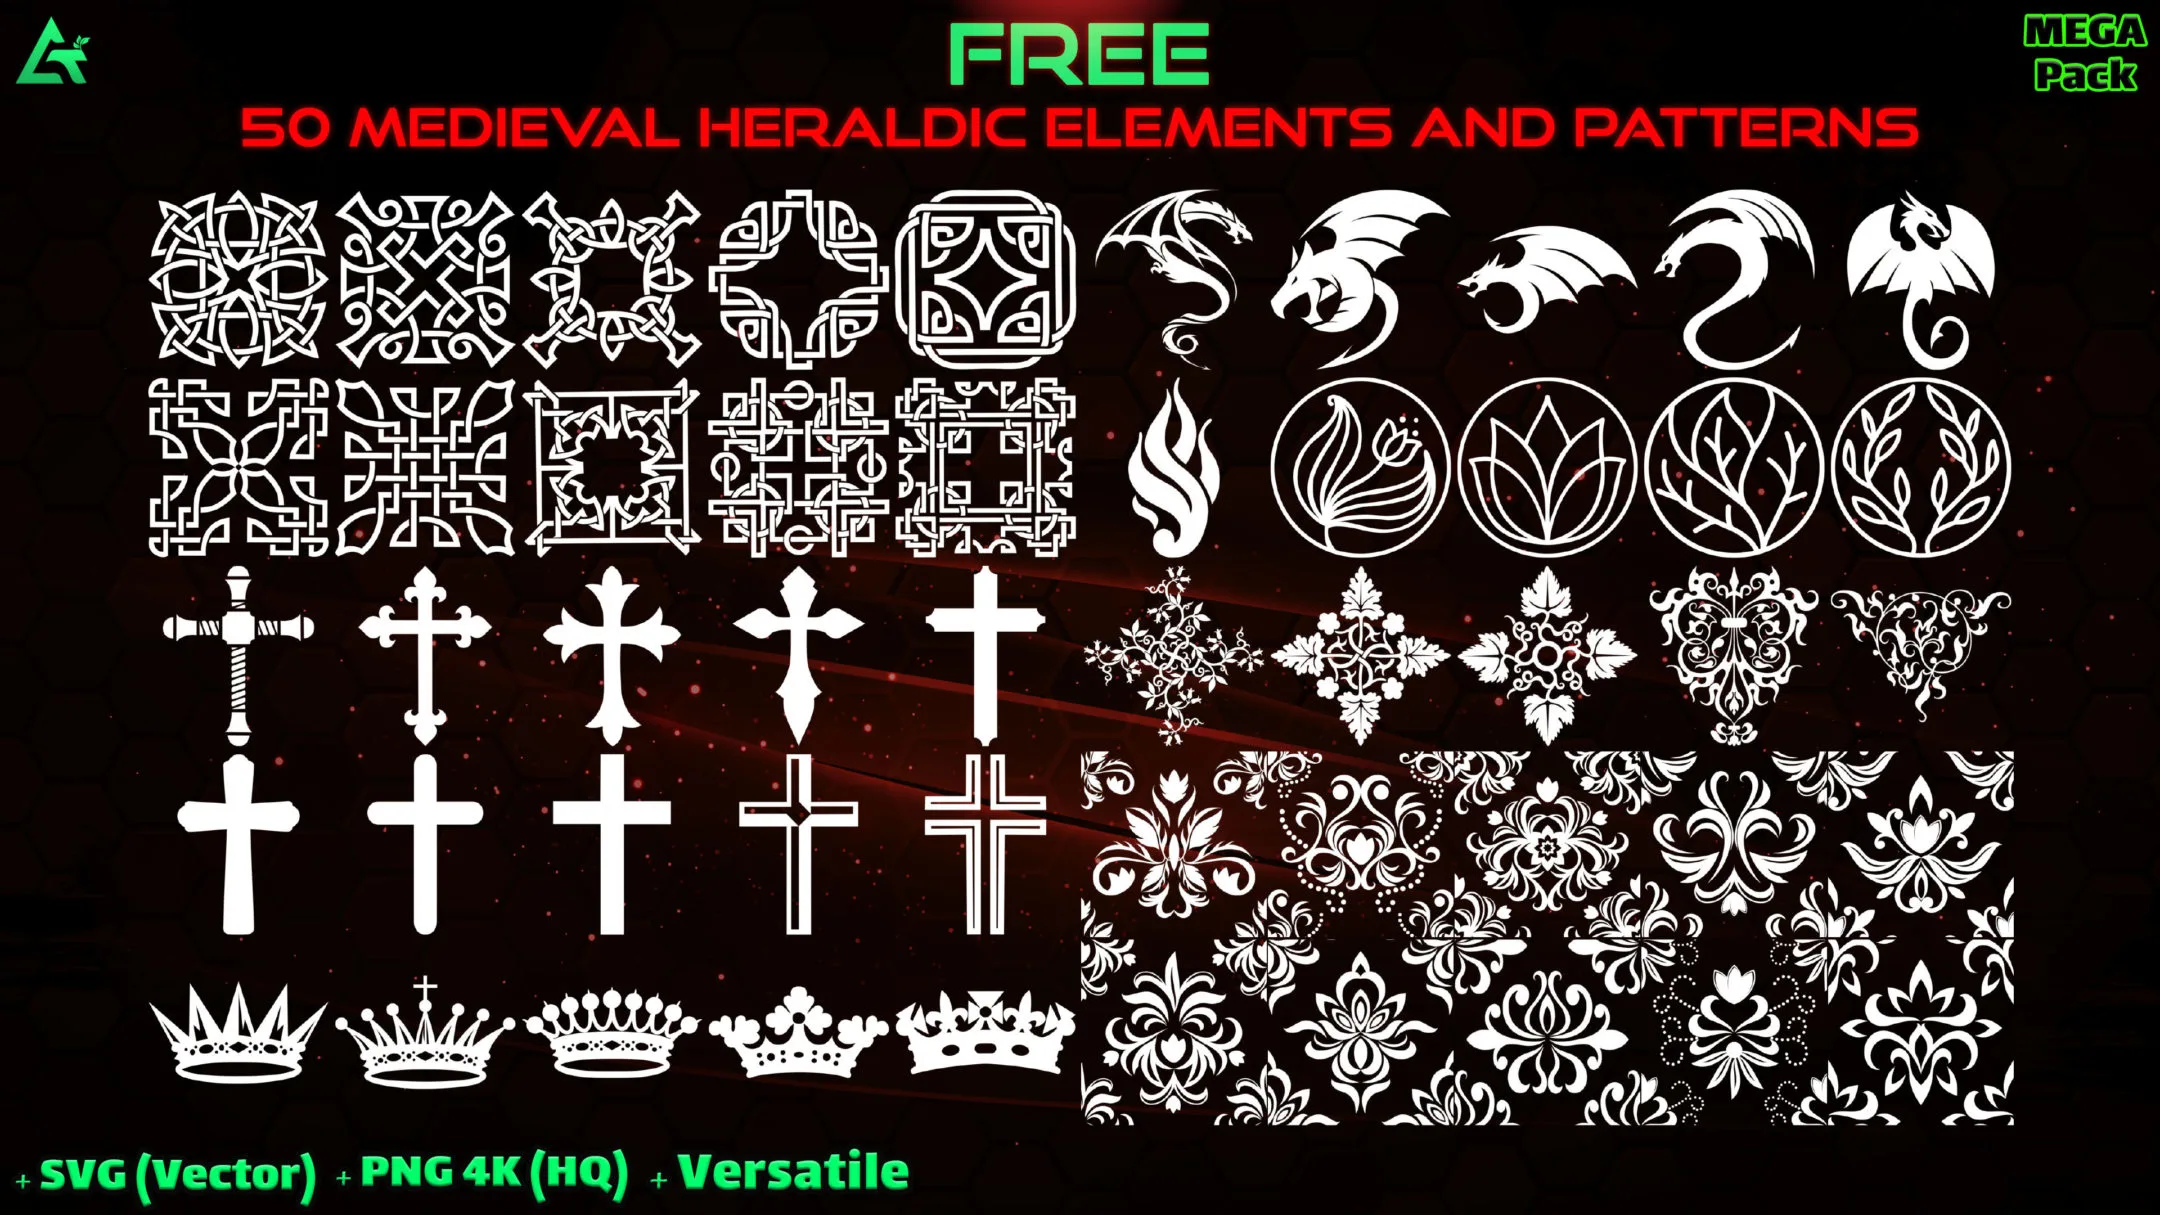 7000 Hand Painted Alpha Medieval Heraldic Symbols, Elements and Patterns (MEGA Pack) - Vol 7